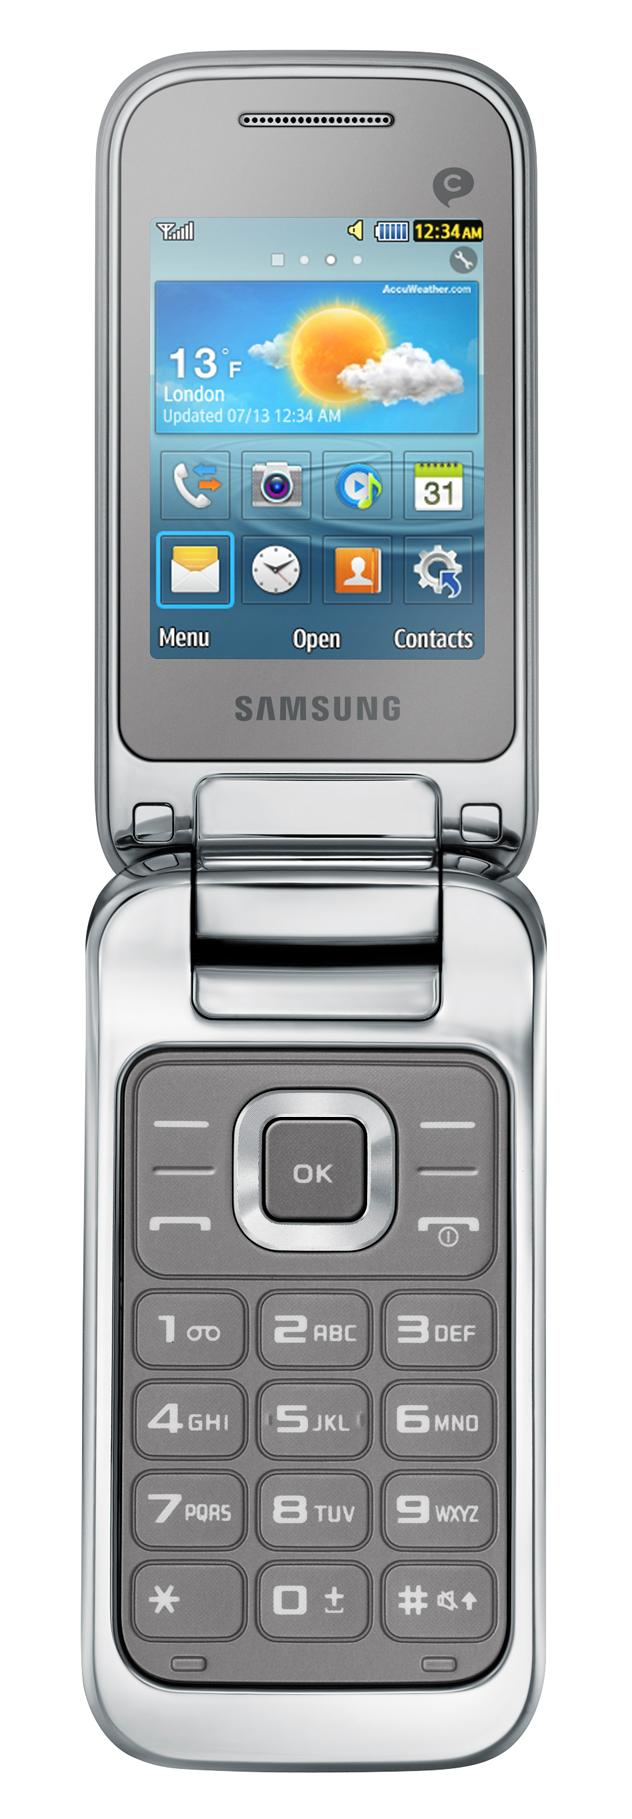 Samsung C3590 zilver